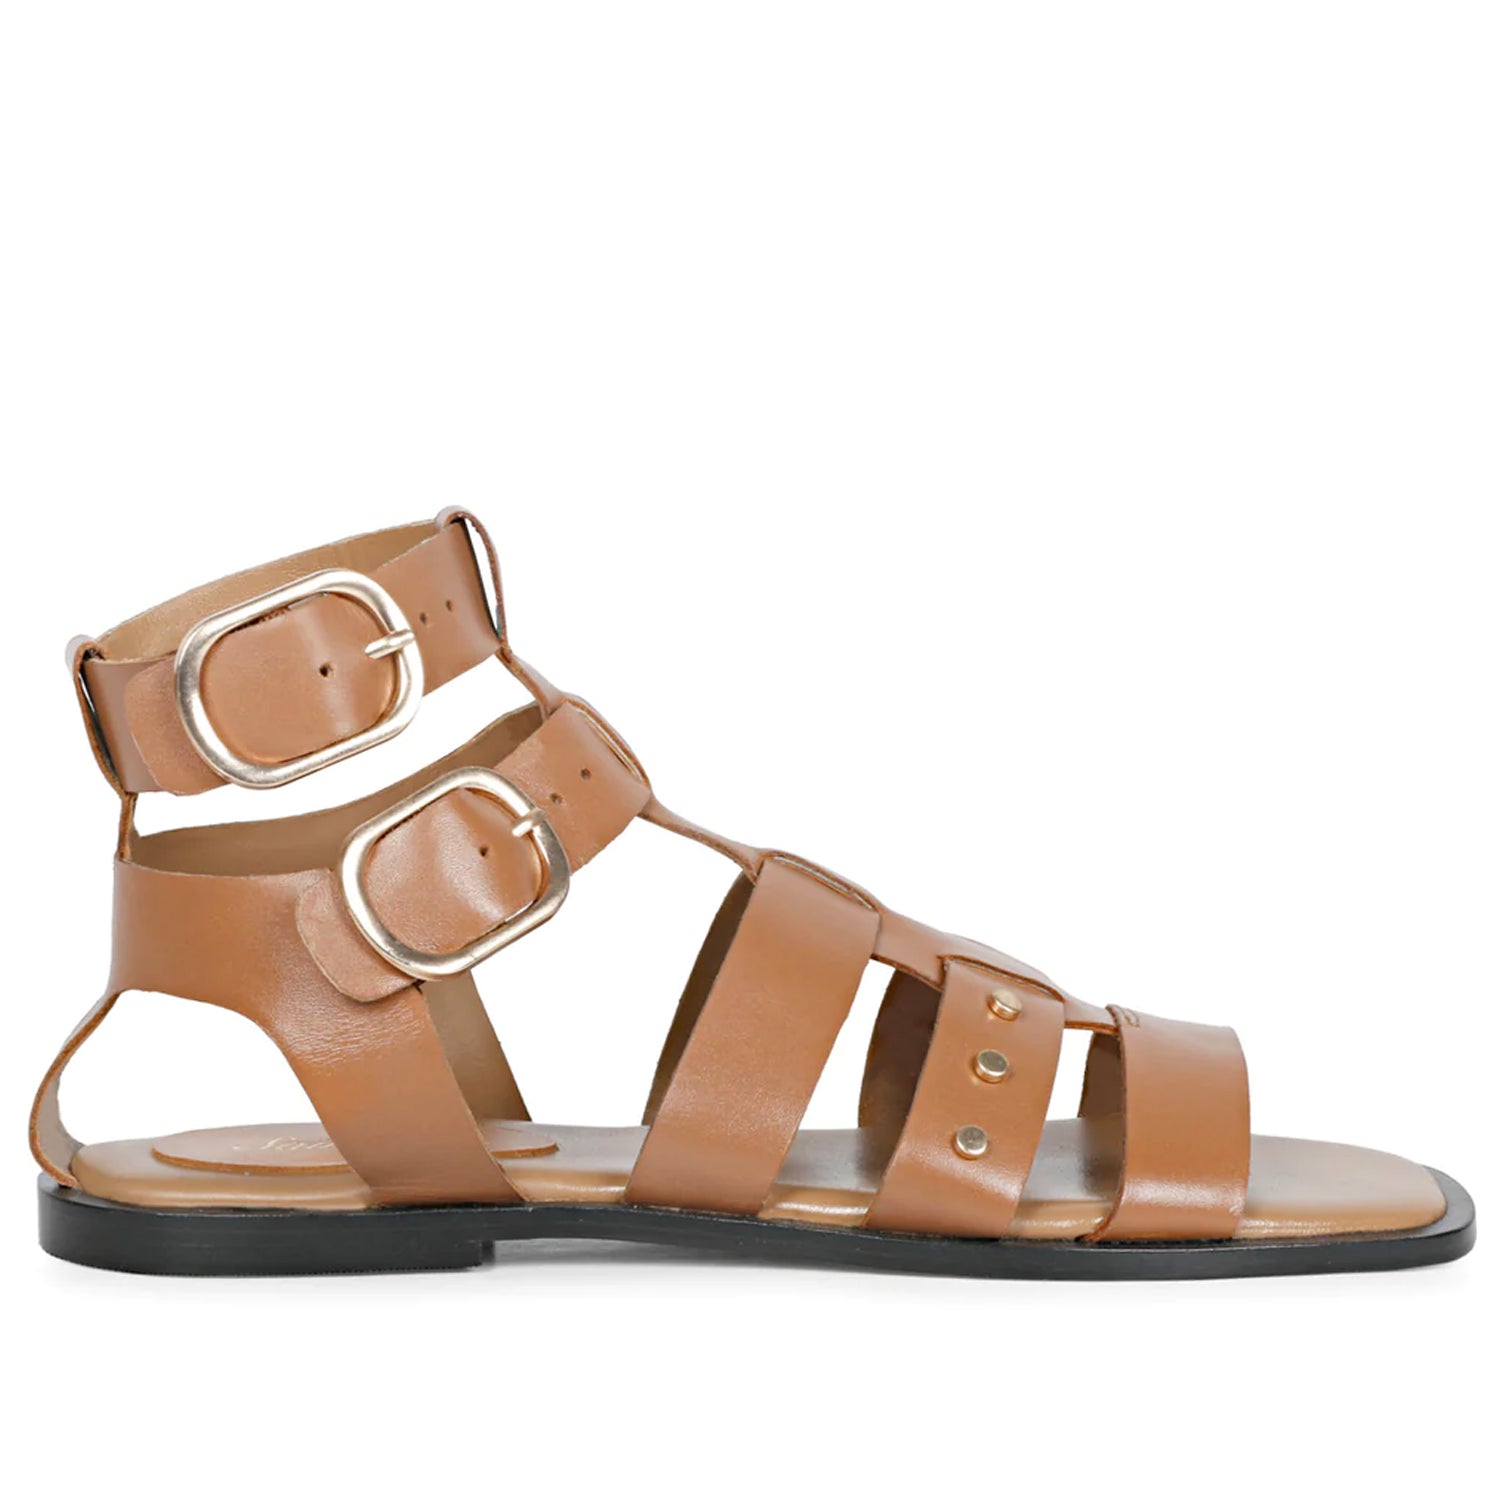 Aeropostale Women's Lace-Up Gladiator Brown Fashion Sandals - 6 UK/India  (39 EU) (8.5 US) (AE2711200) : Amazon.in: Shoes & Handbags